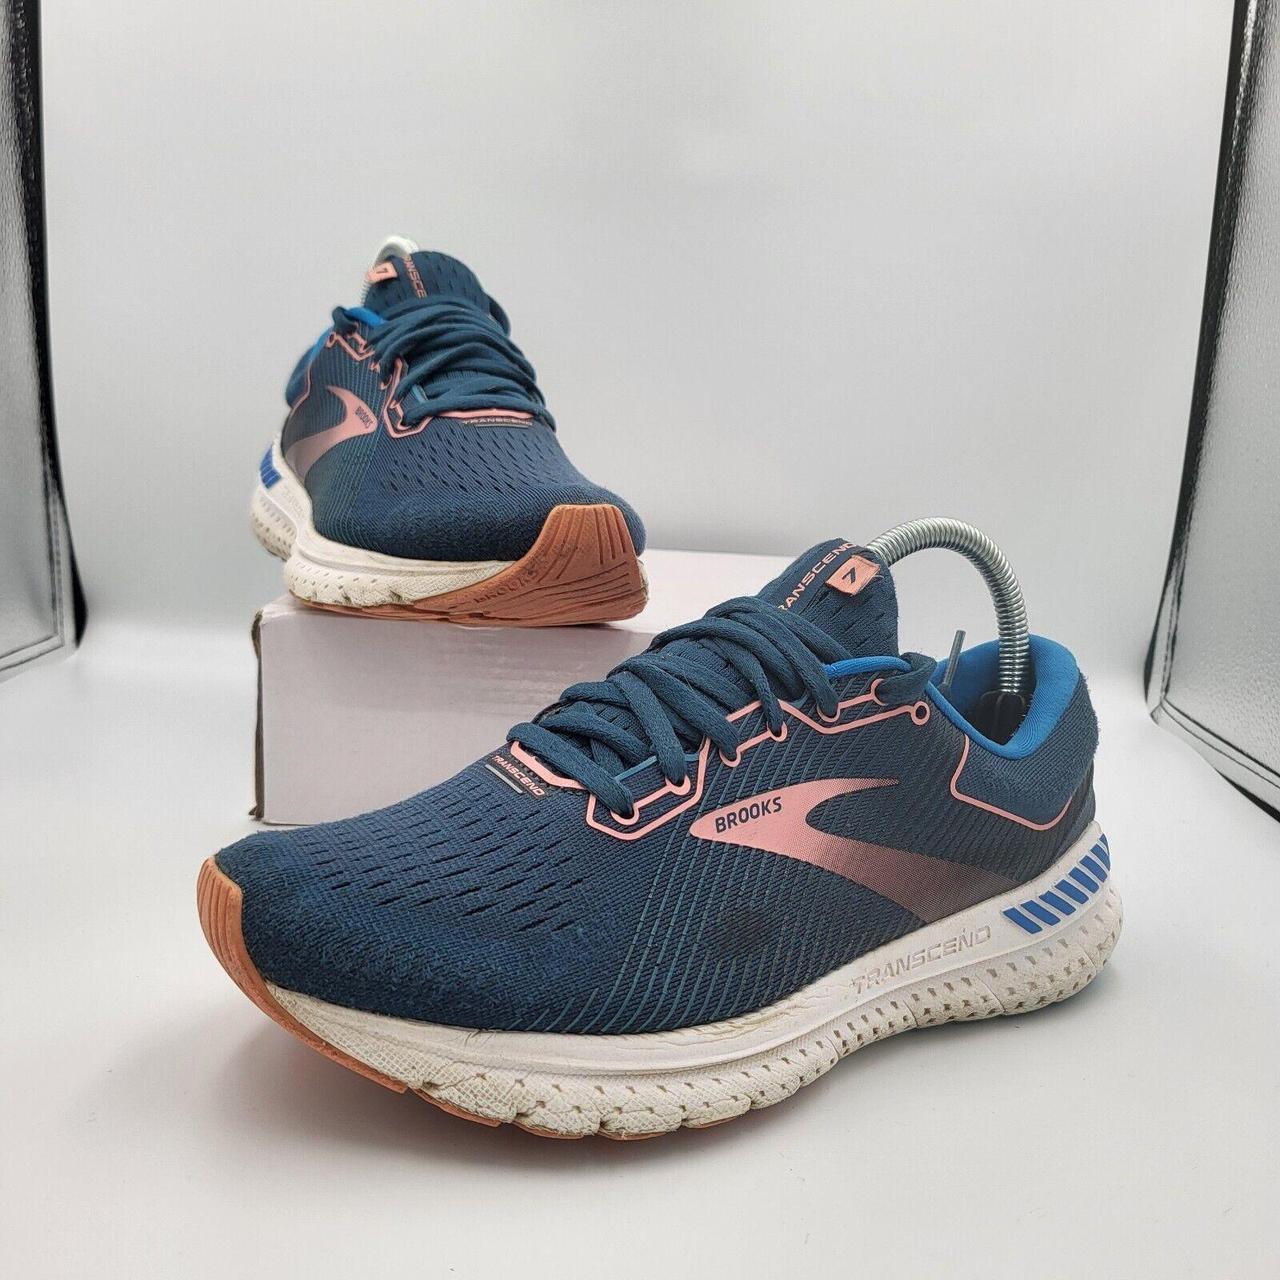 Brooks Transcend 7 Woman's Blue Running Shoes - Depop